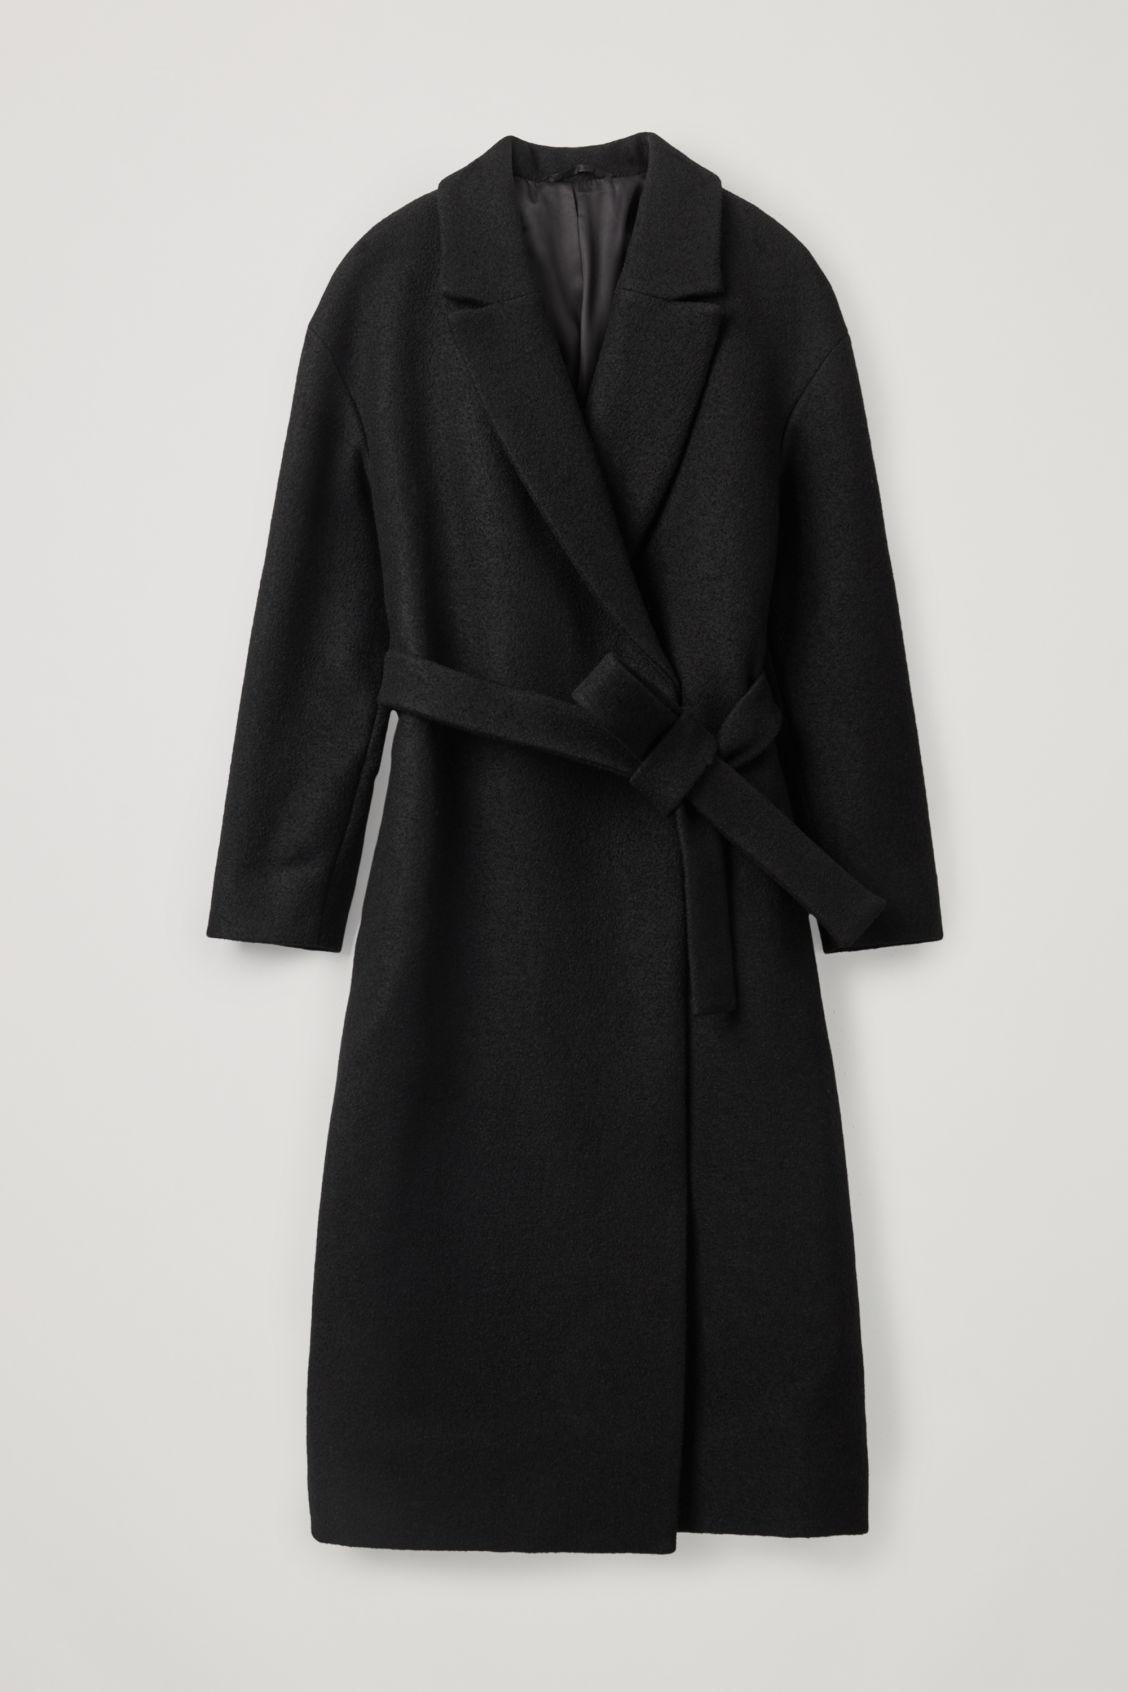 COS Oversized Belted Wool Coat in Black - Lyst